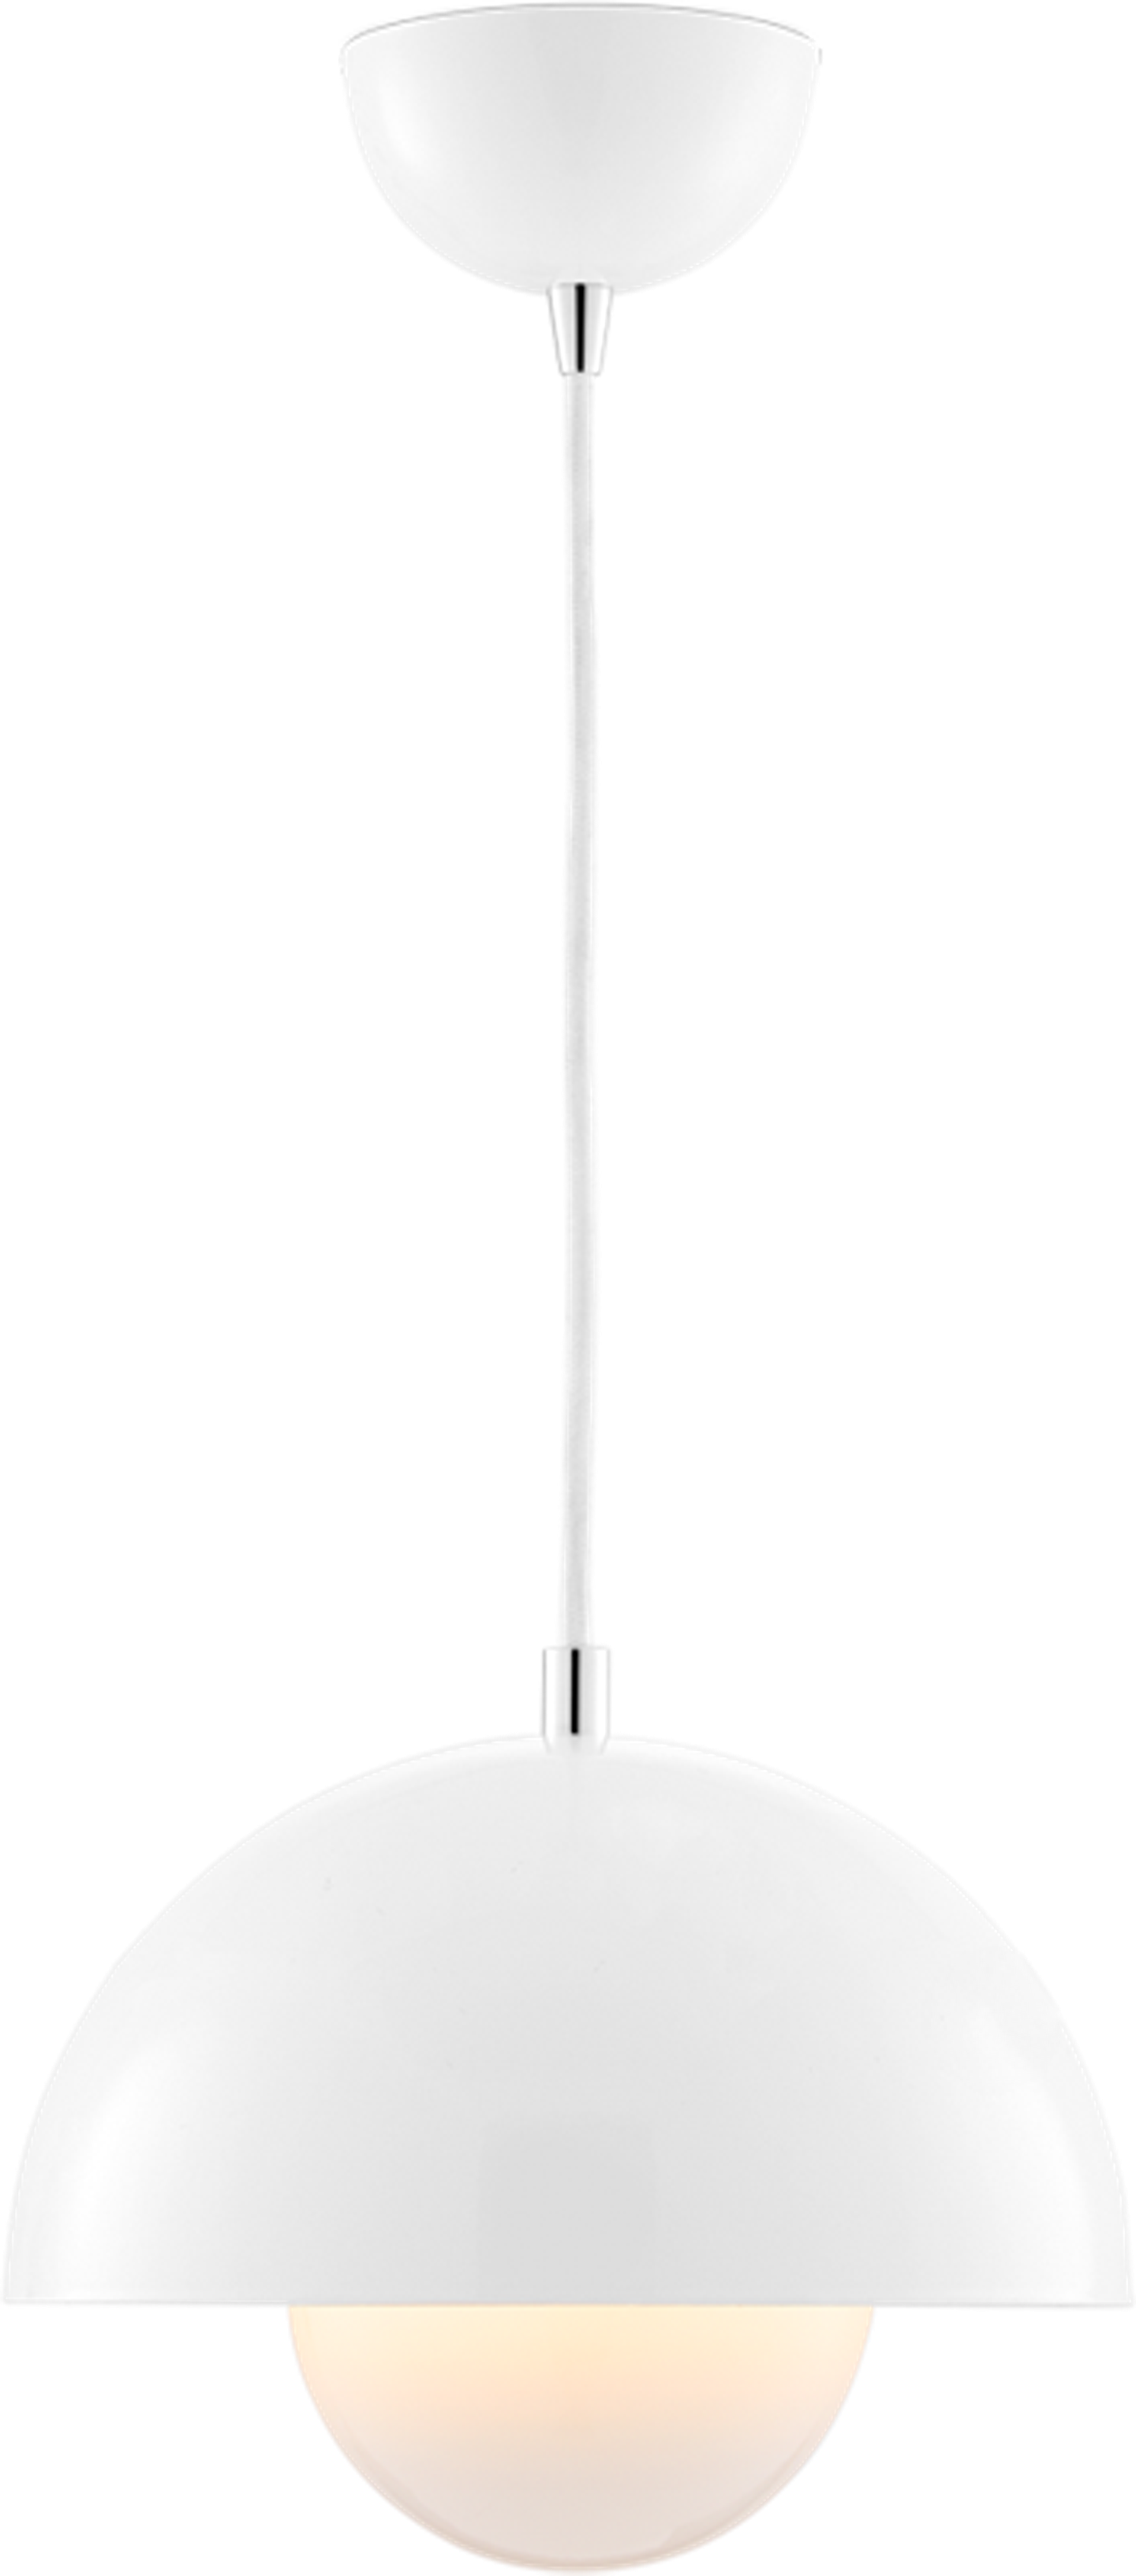 Blomkruka lampa White image.